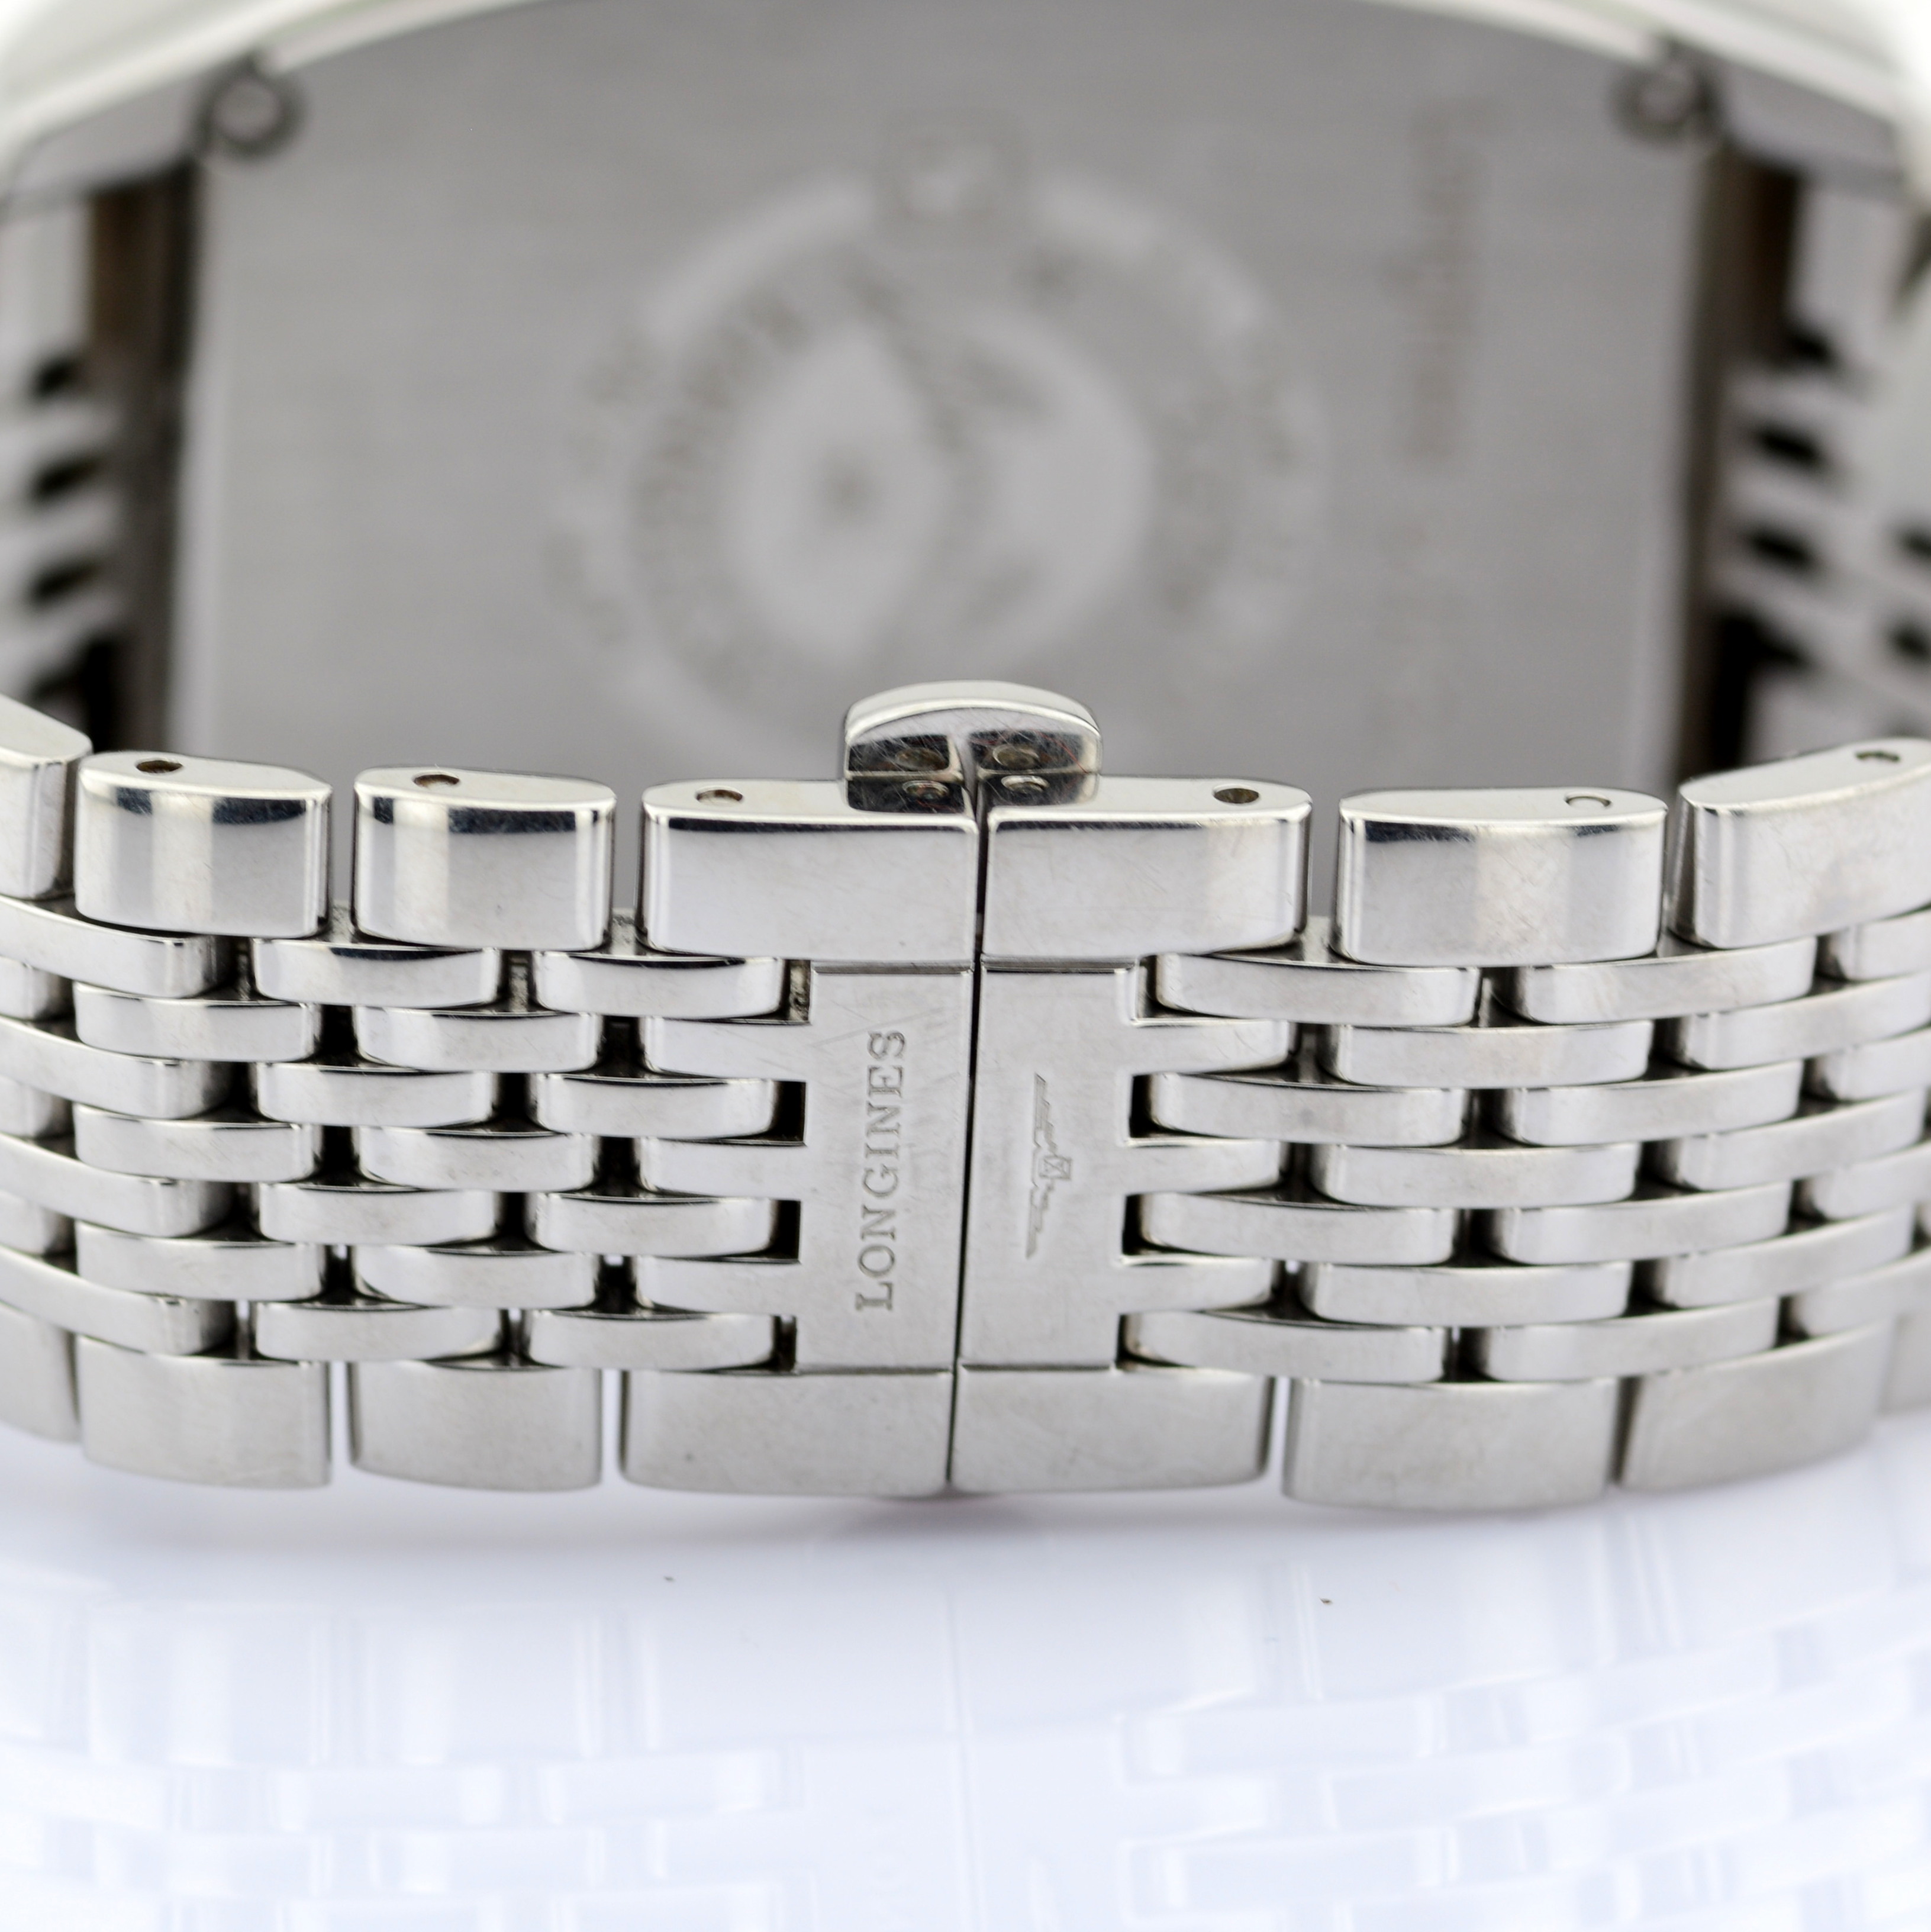 Longines / Longines Evidenza XL 56 mm Chronographe Day Date - Gentlmen's Steel Wrist Watch - Image 4 of 7